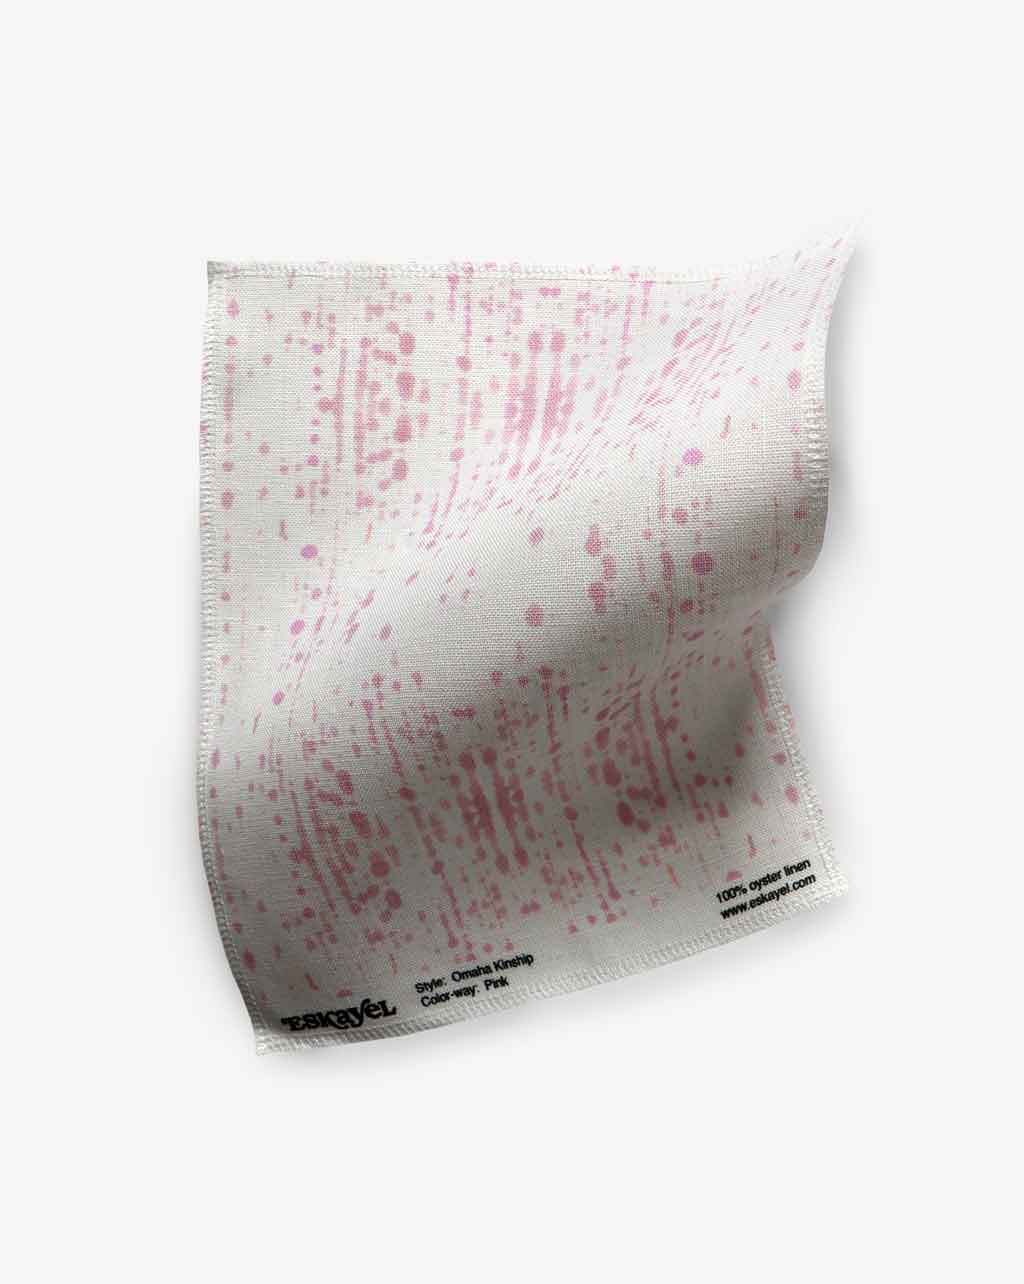 An Omaha Kinship Fabric Sample Pink fabric with dots on it